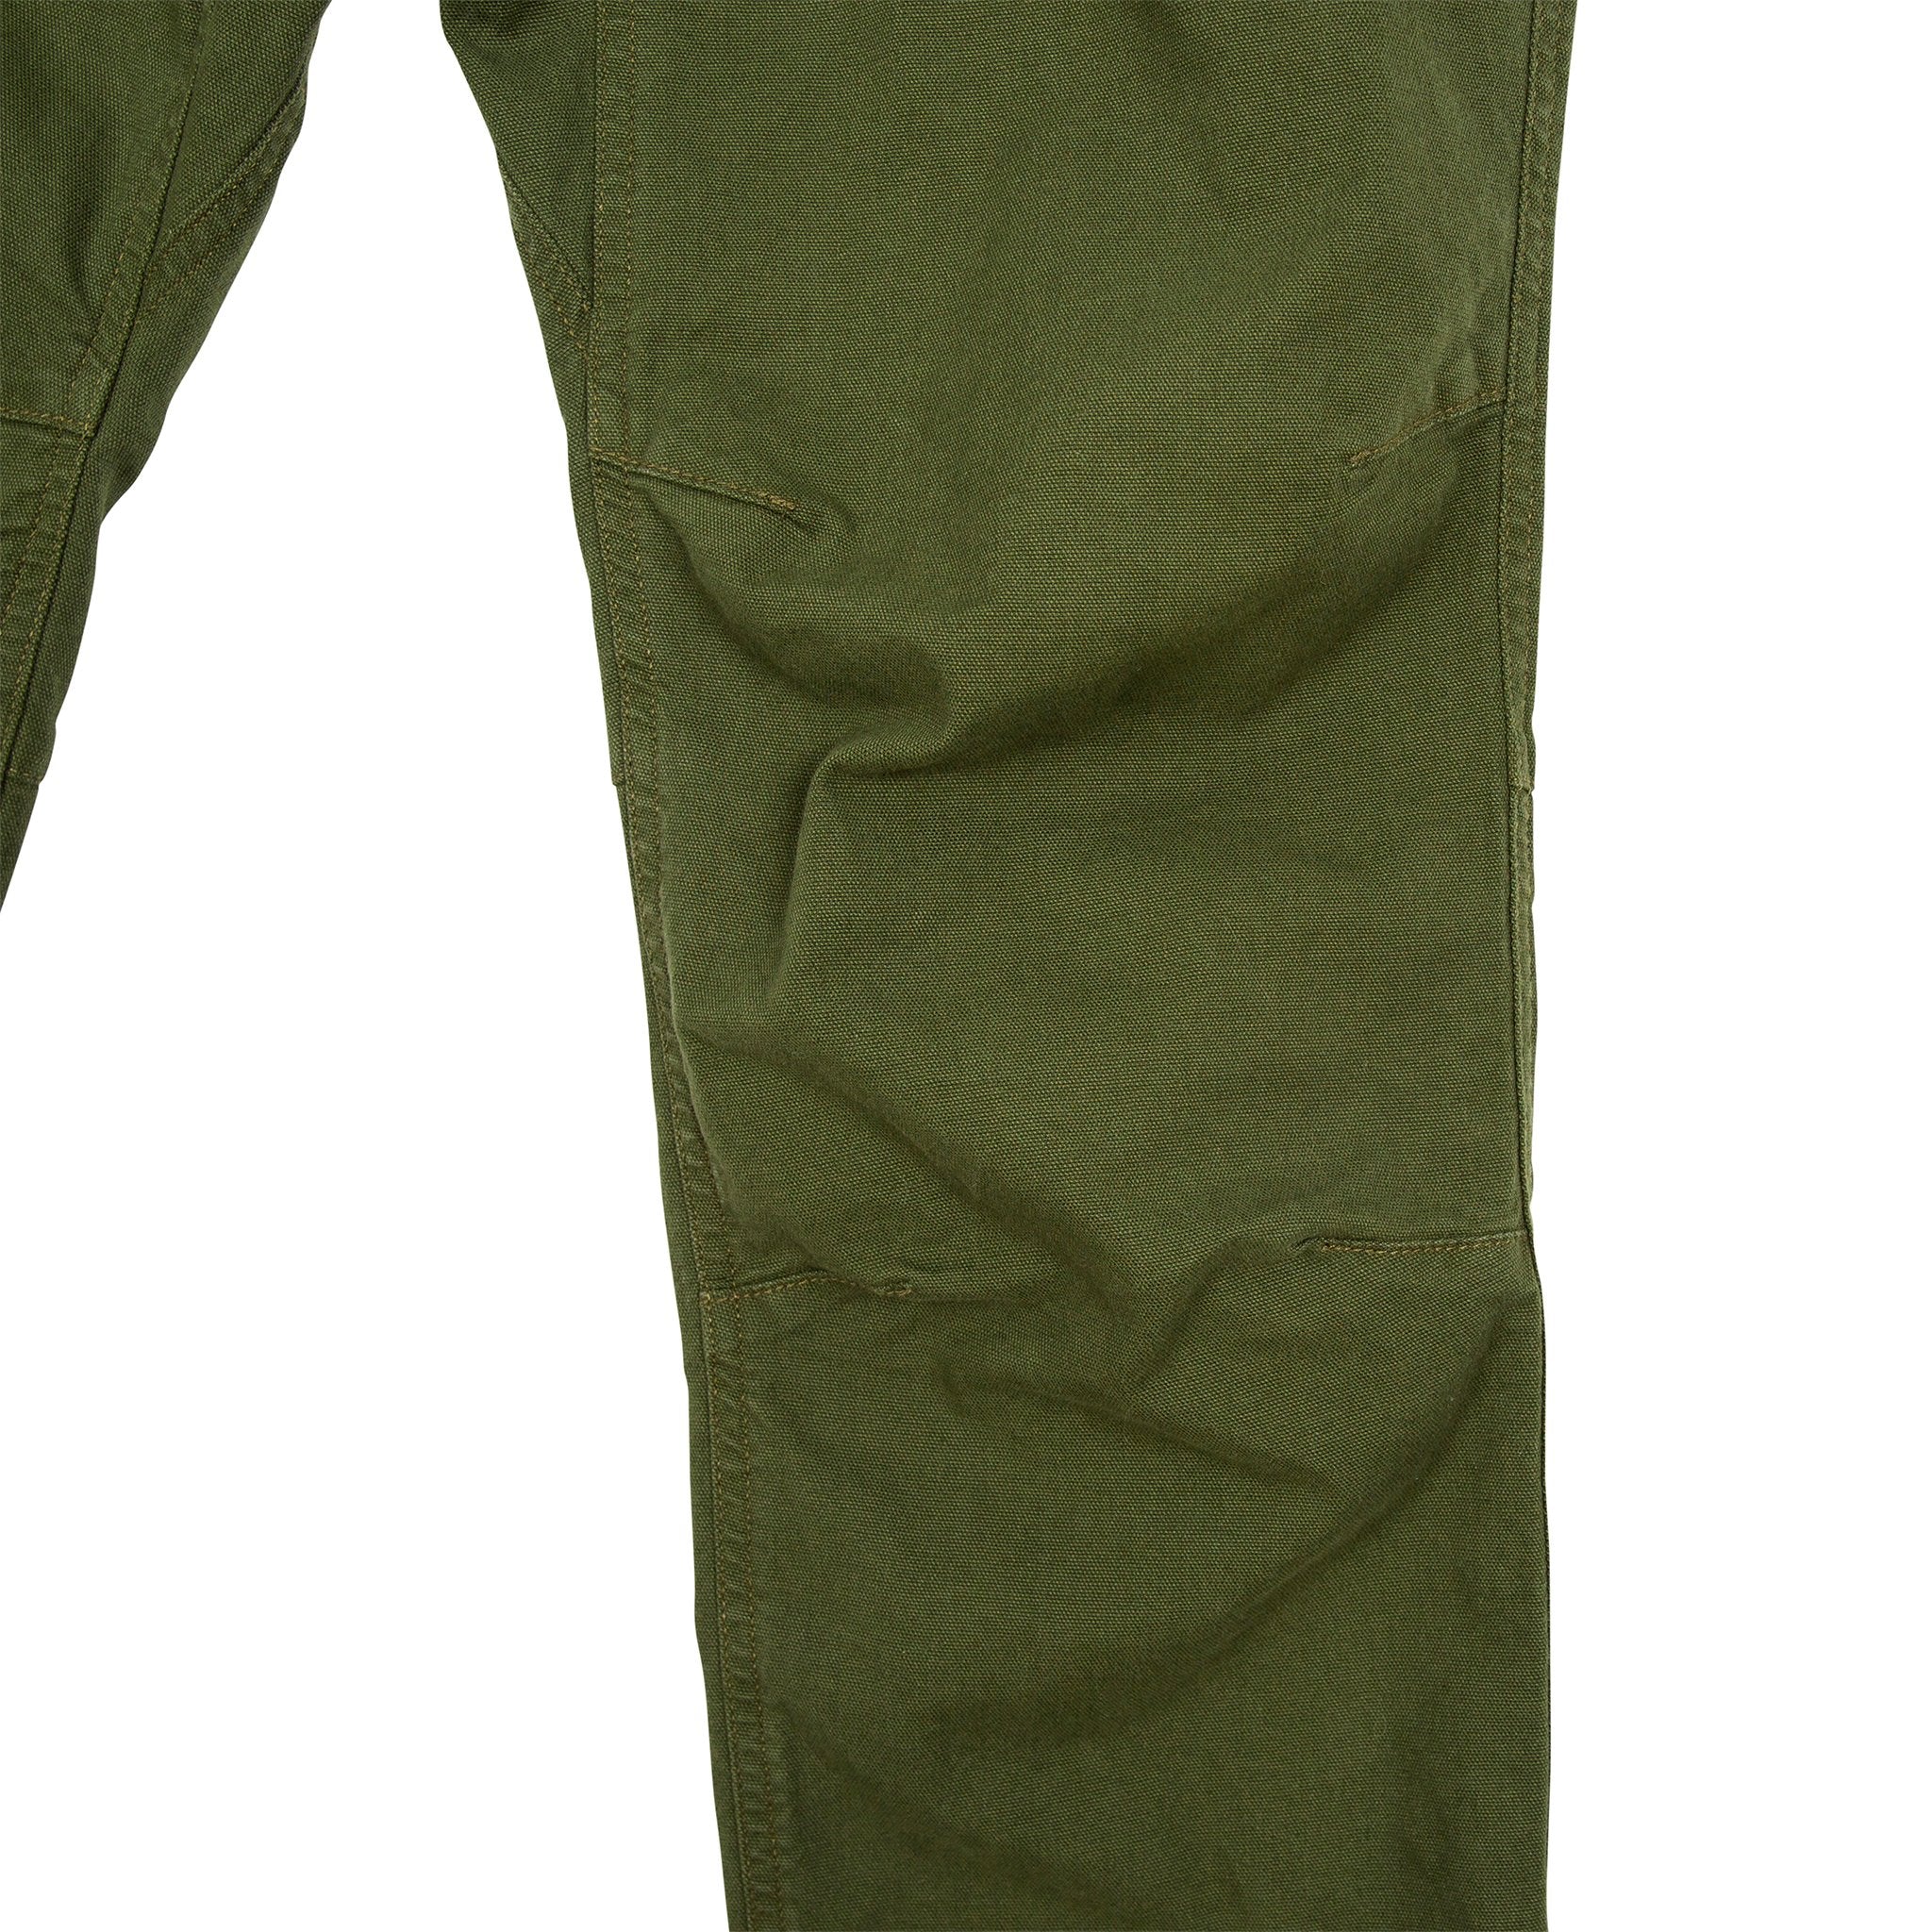 General detail shot of Topo Designs Men's Dirt Pants in Olive green showing knee area.